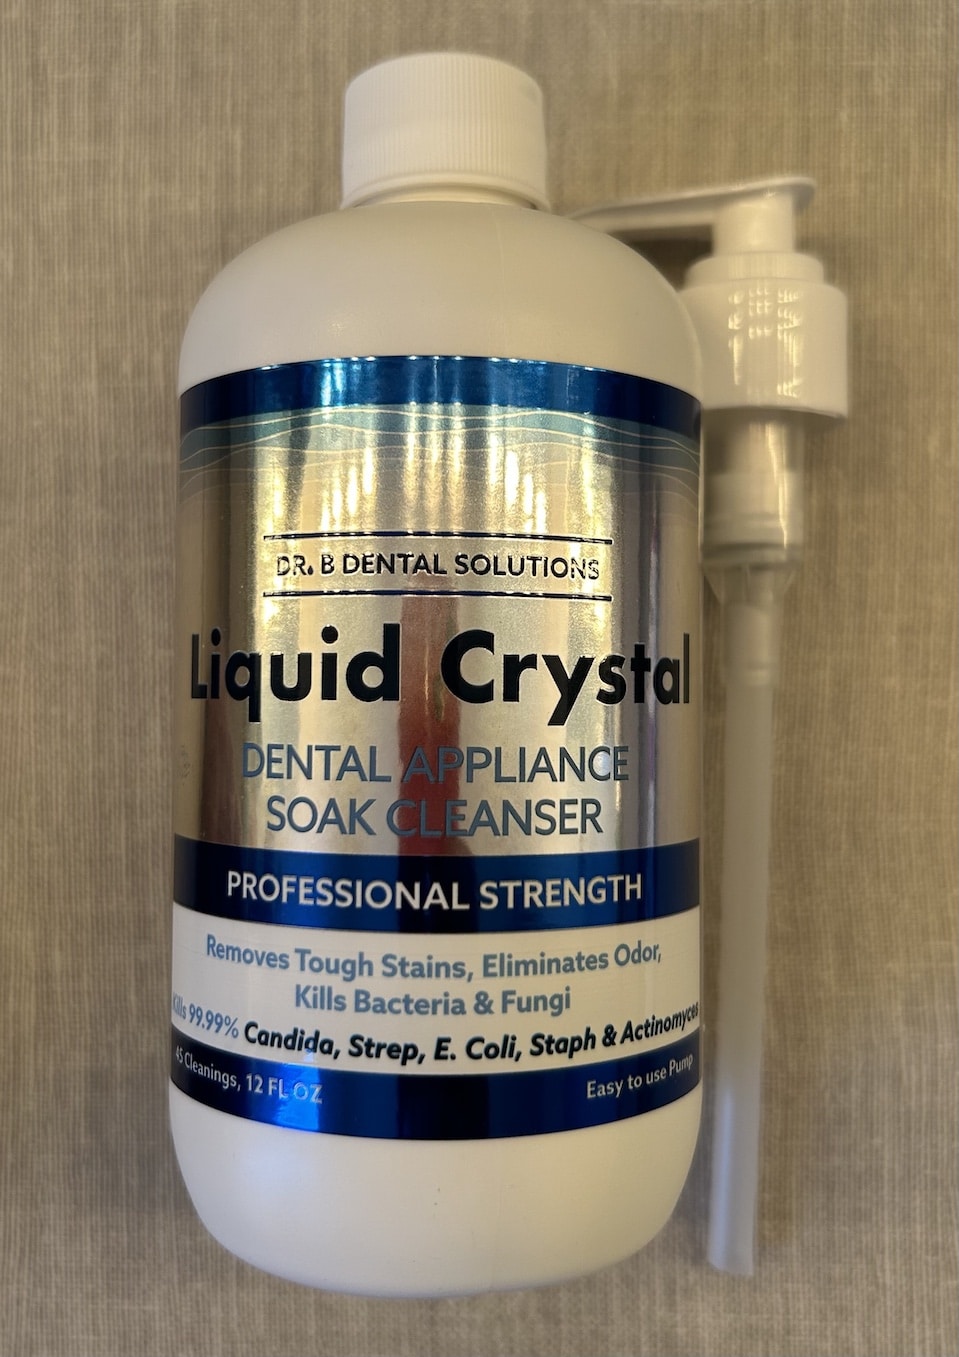 Dr. B Dental Solutions Liquid Crystal Dental Appliance Cleaner | My Dental Advocate